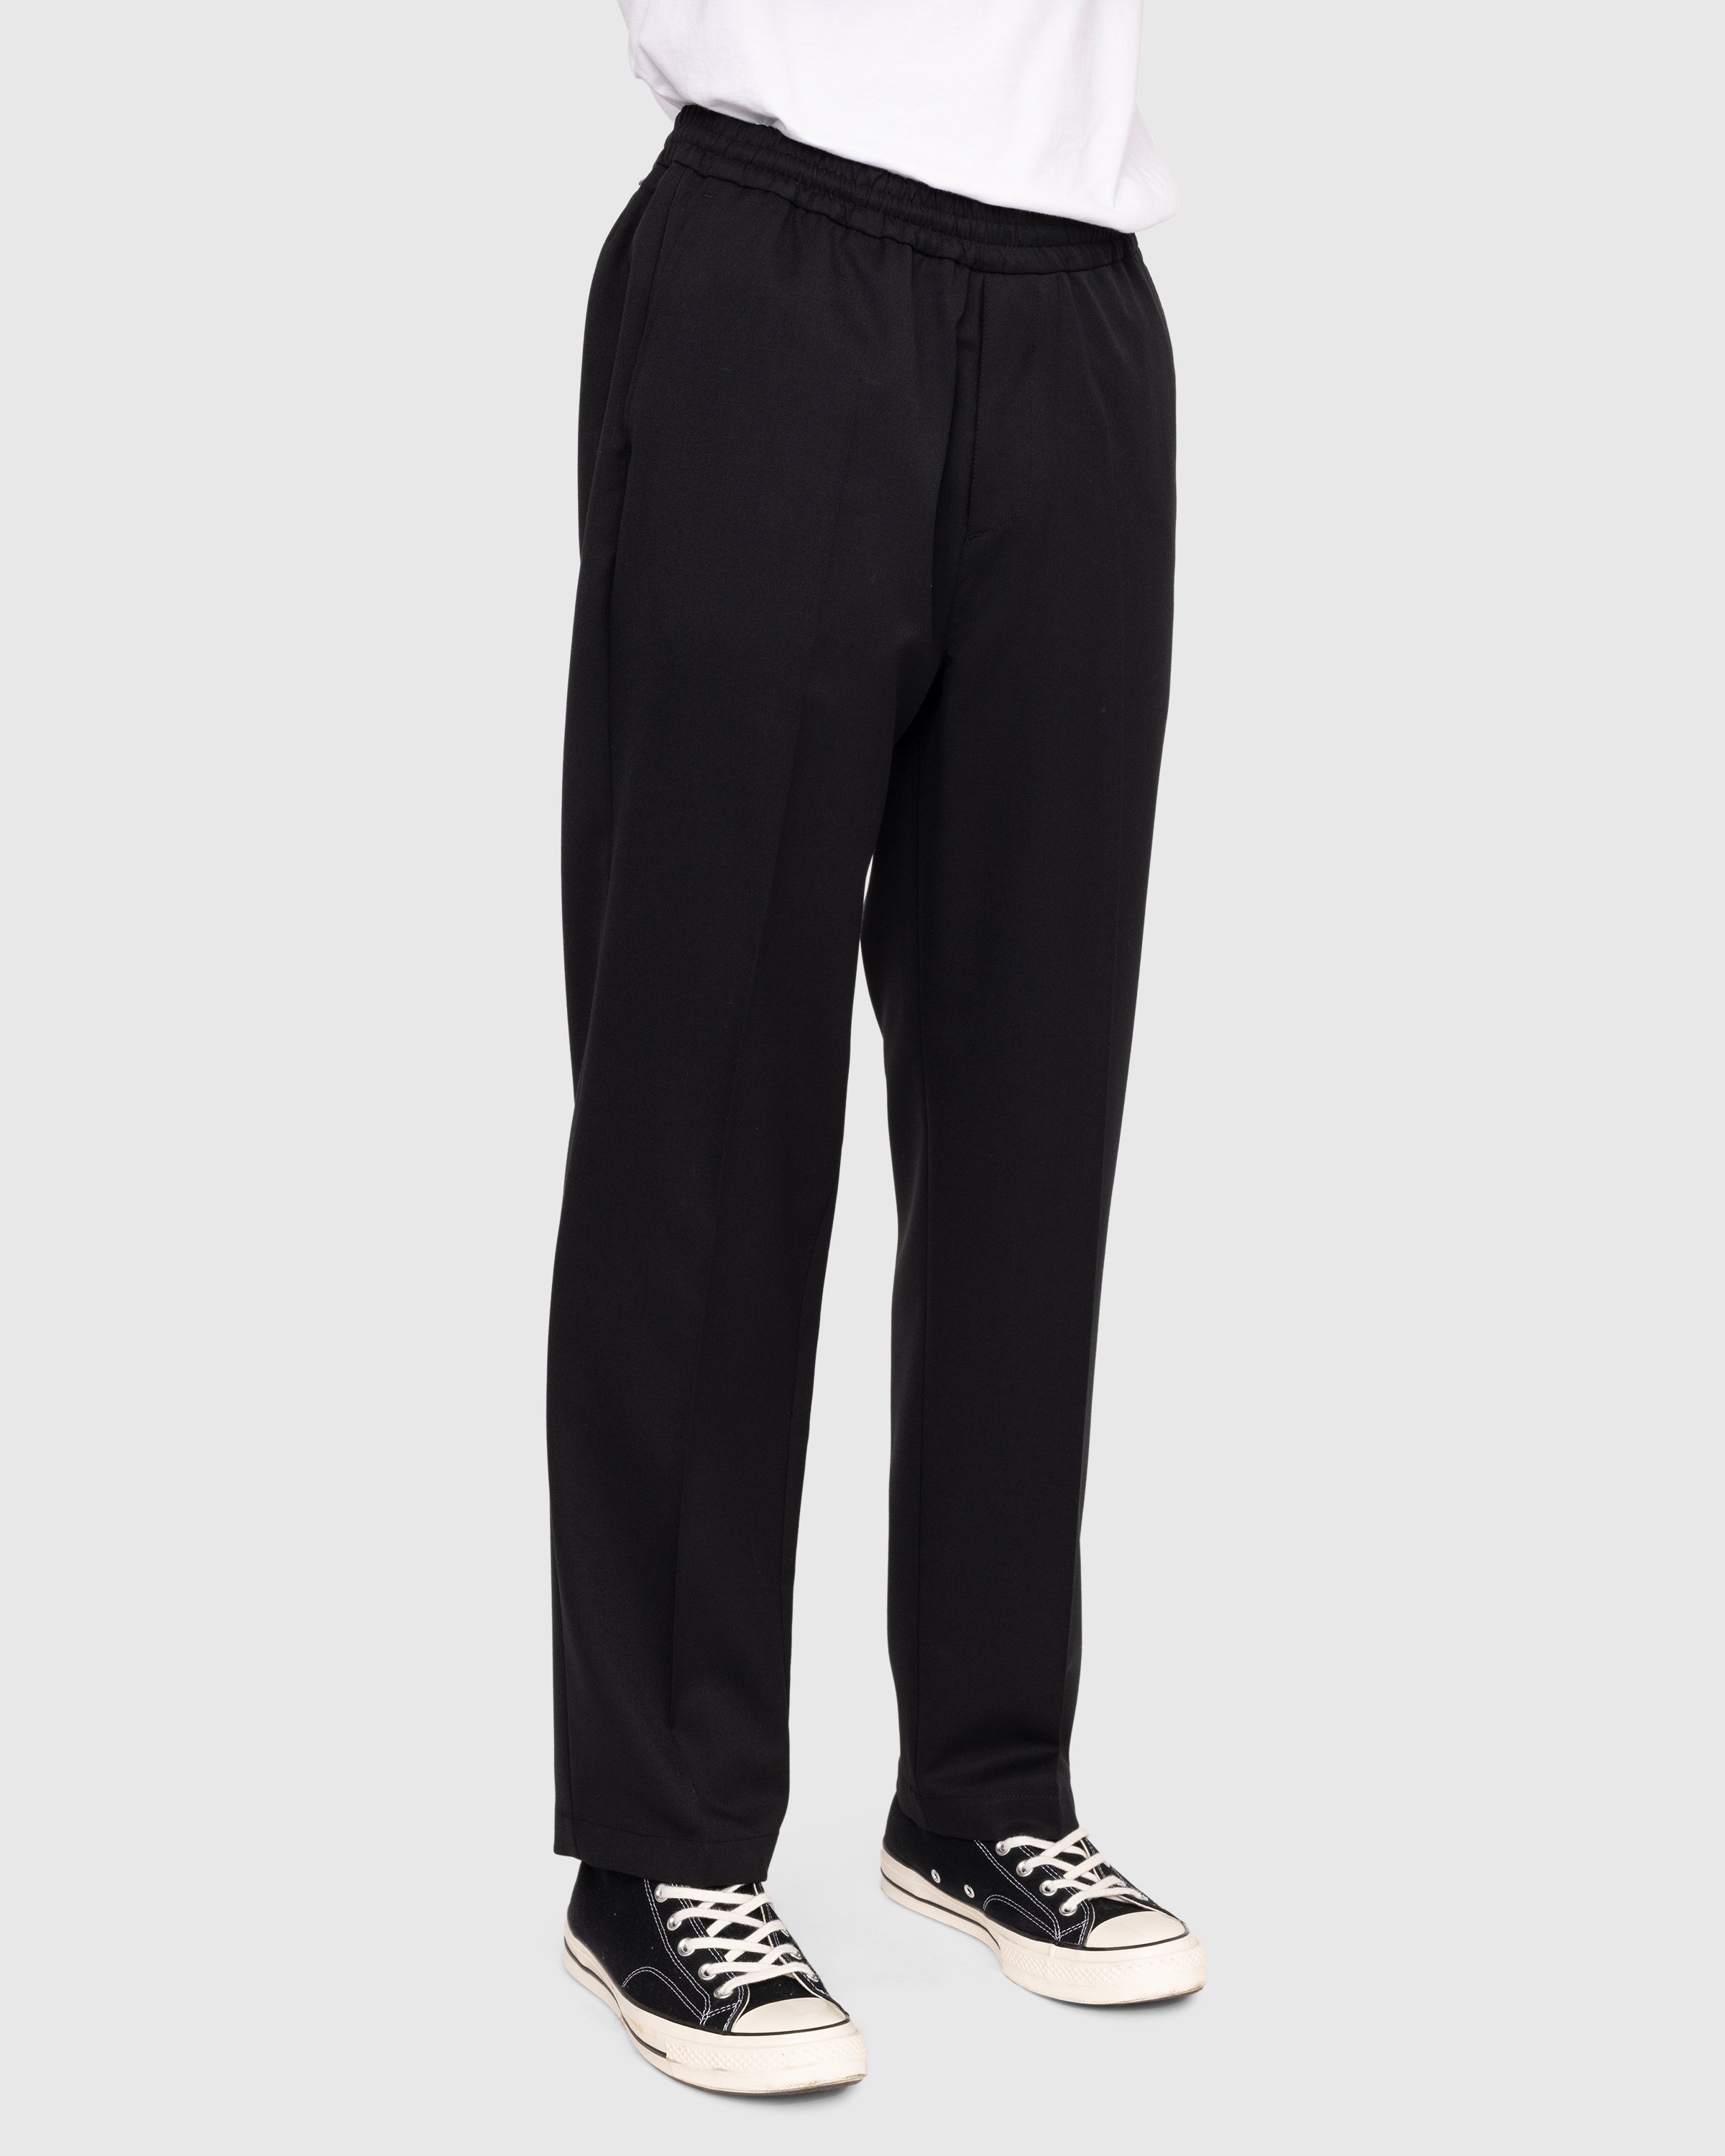 Highsnobiety - Wool Blend Elastic Pants Black - Clothing - Black - Image 3